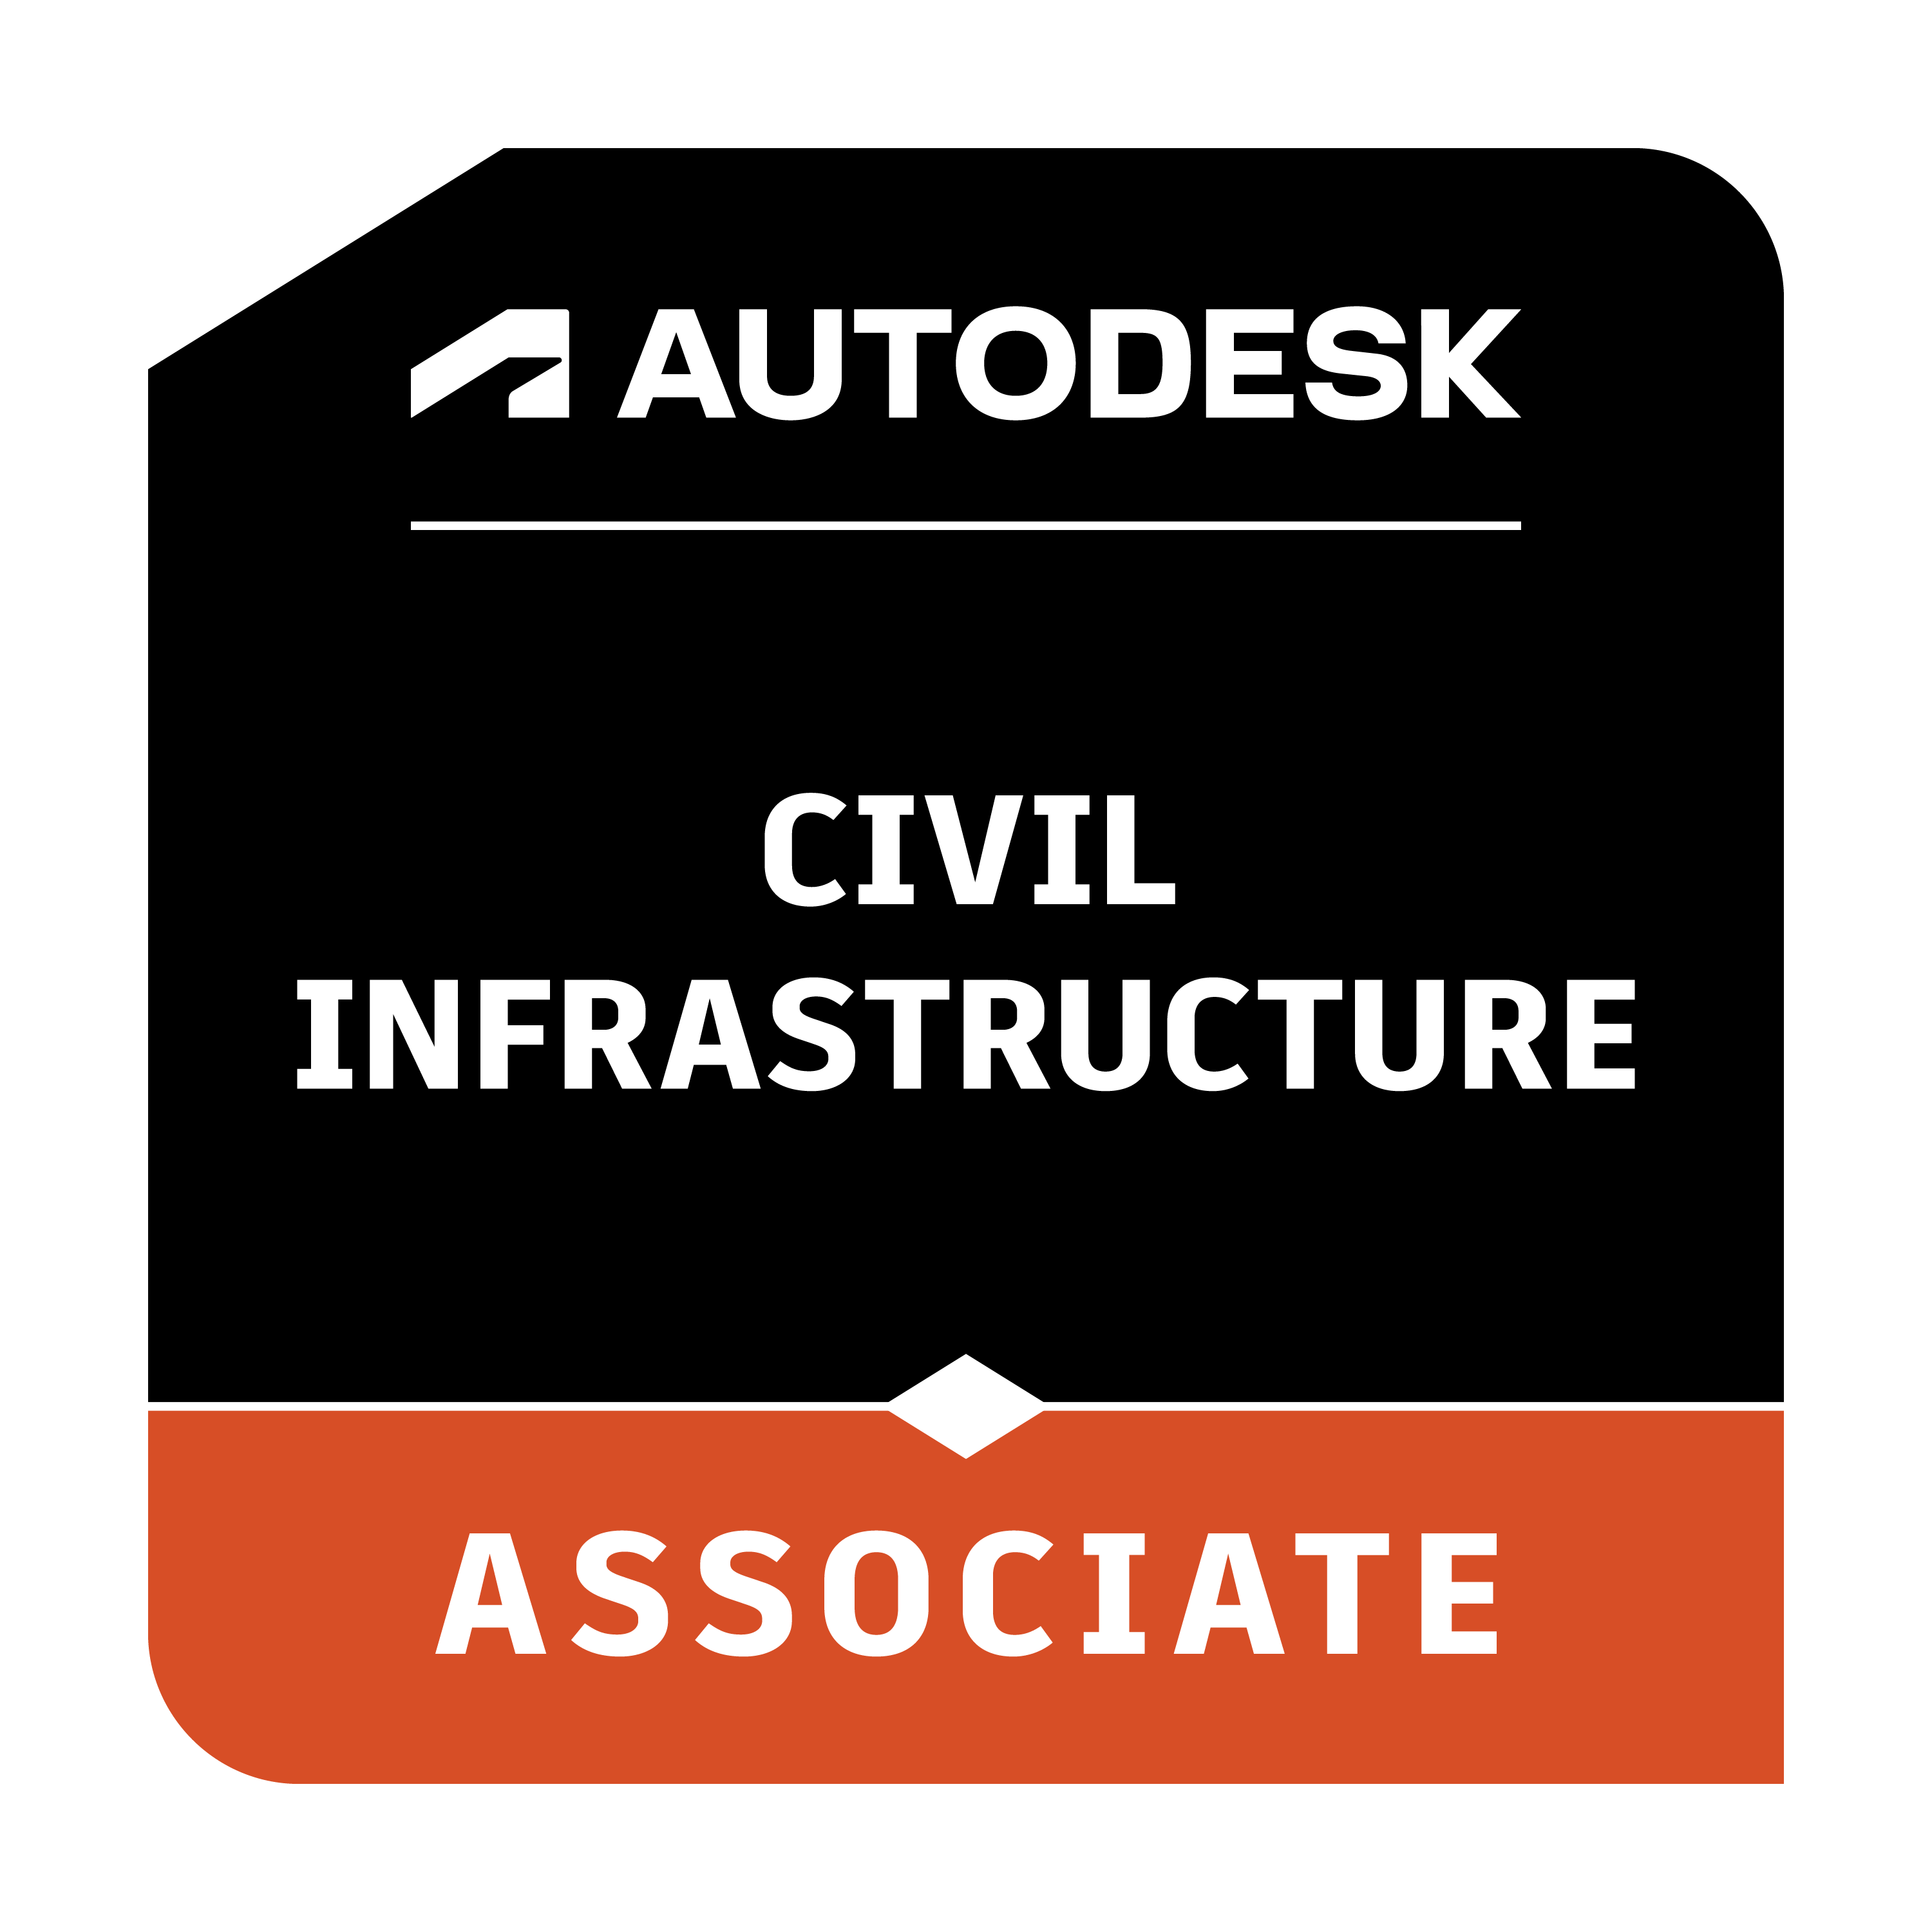 Civil Infrastructure